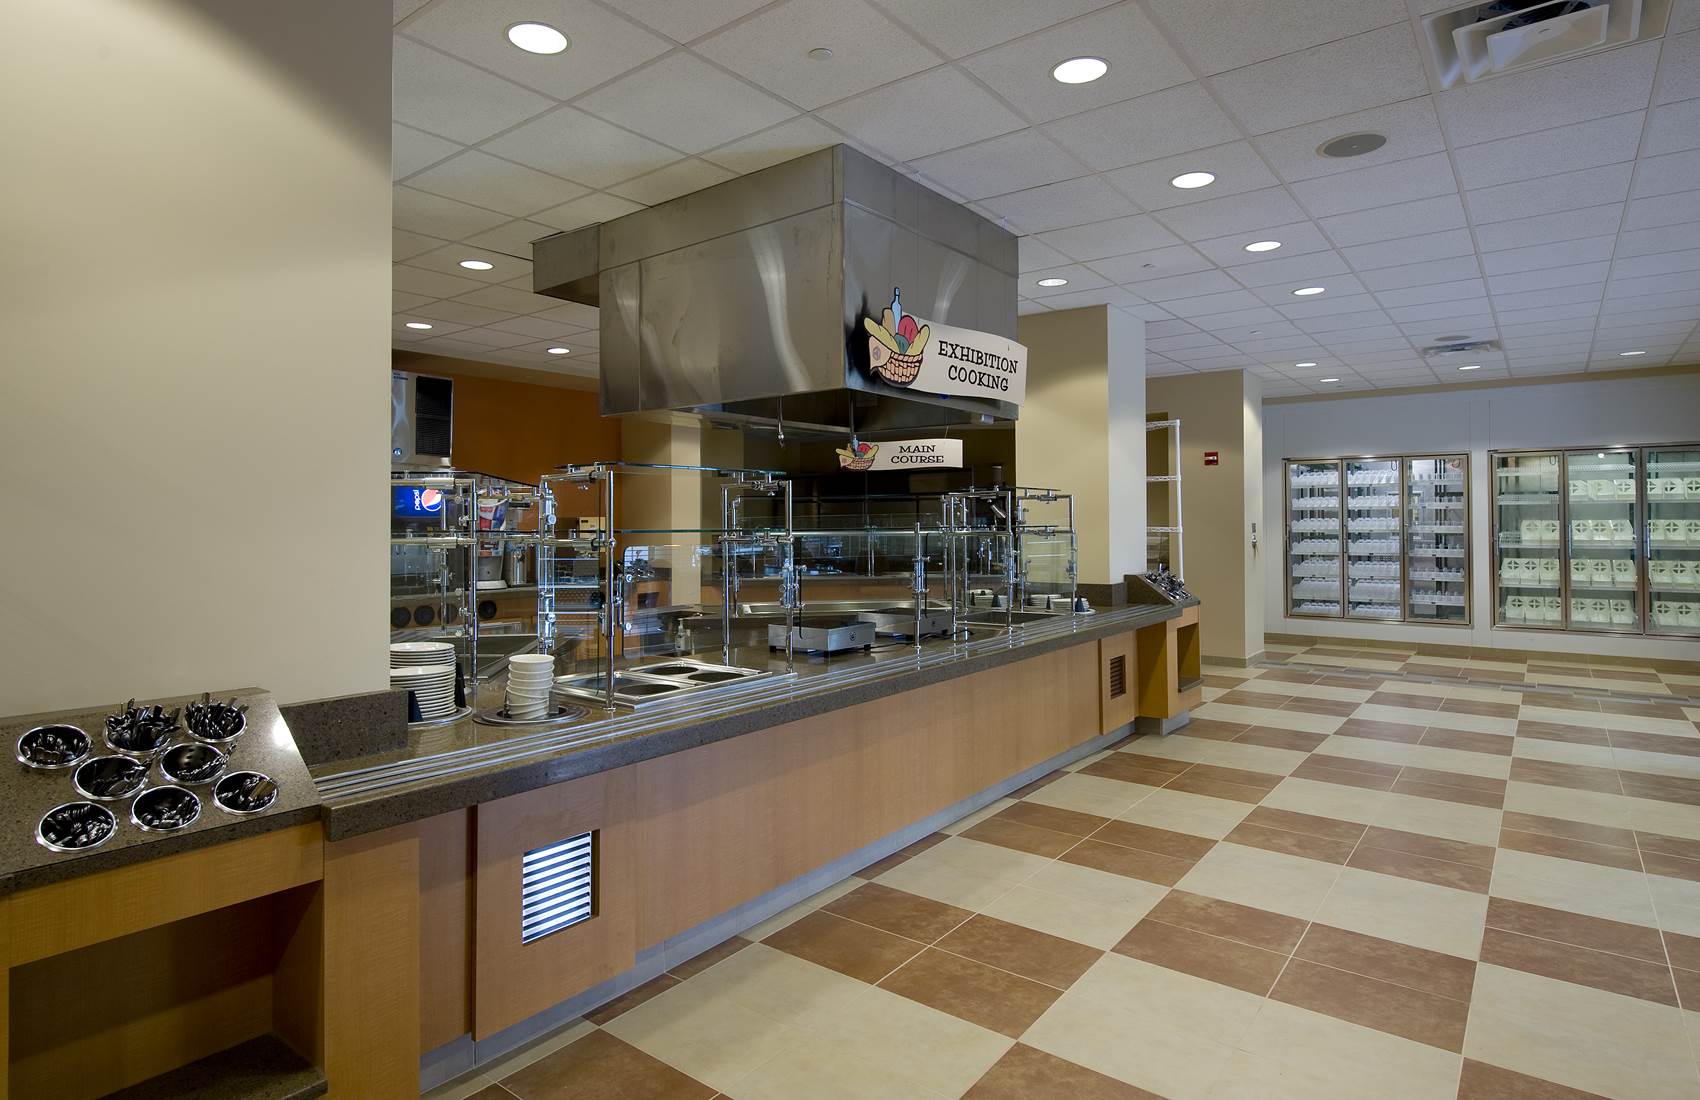 Food service area at Florida Hospital Memorial Medical Center